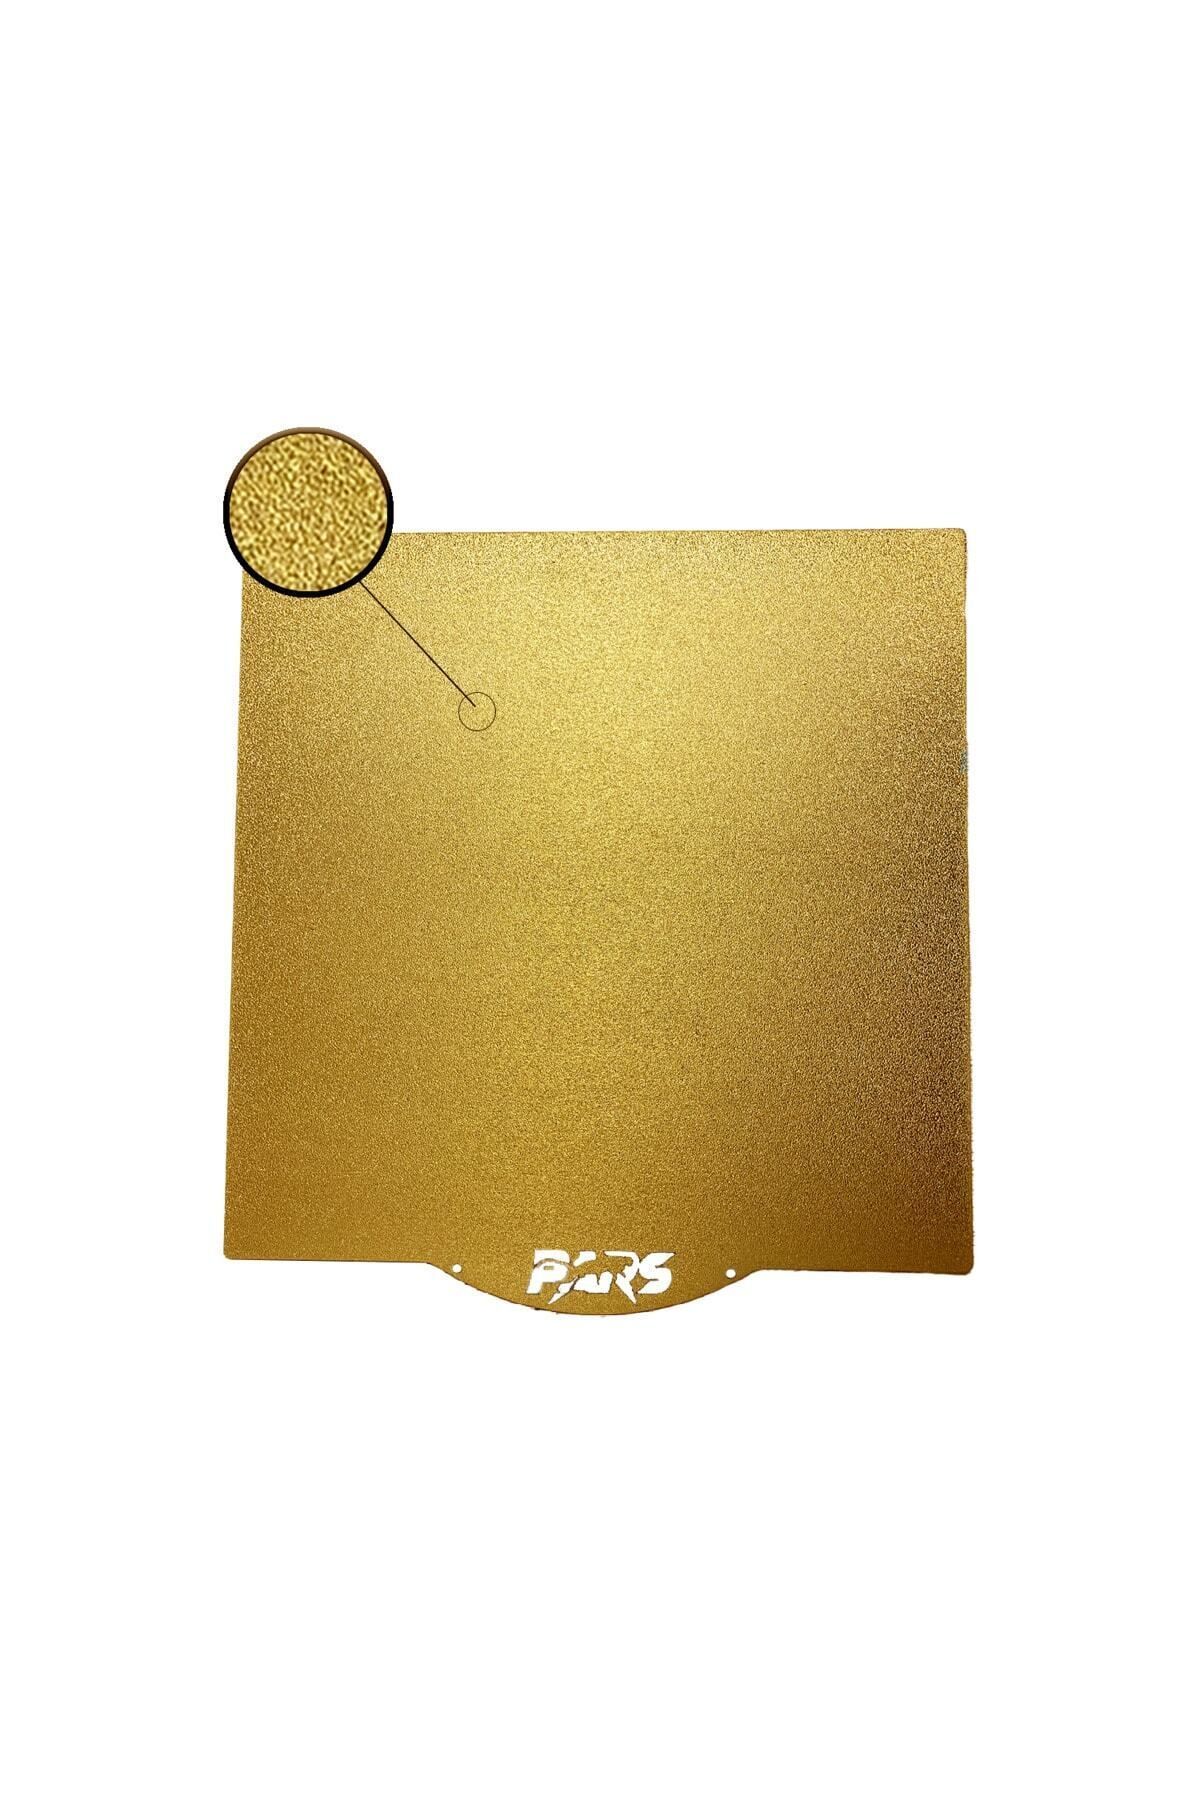 Pars 250x250 Mm Gold Pei Kaplı Özel Yay Çeliği Tabla Magnetsiz